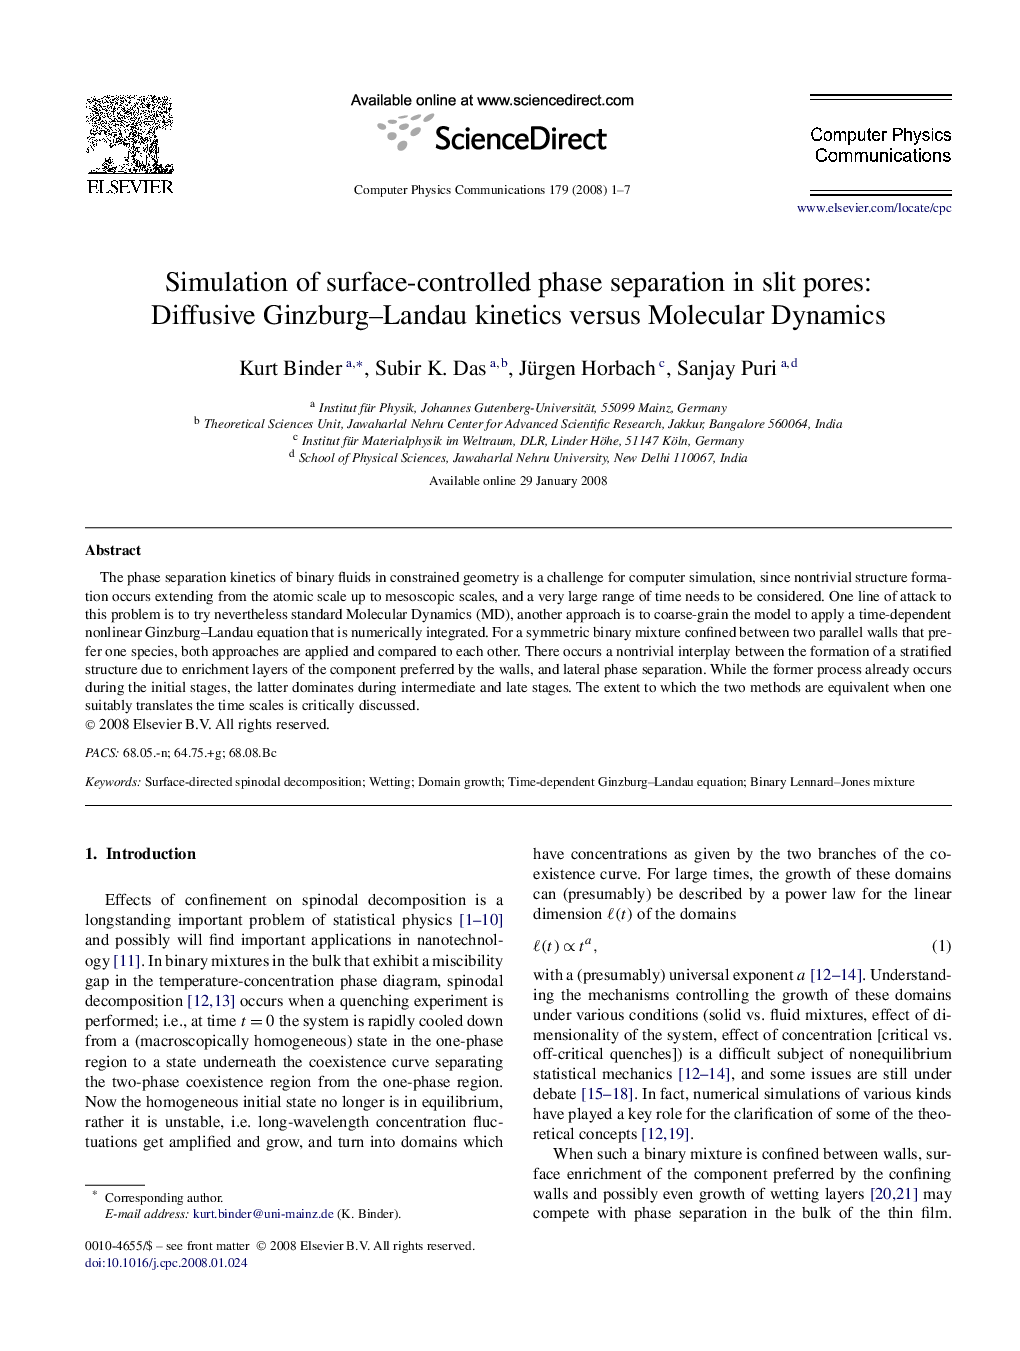 Simulation of surface-controlled phase separation in slit pores: Diffusive Ginzburg–Landau kinetics versus Molecular Dynamics